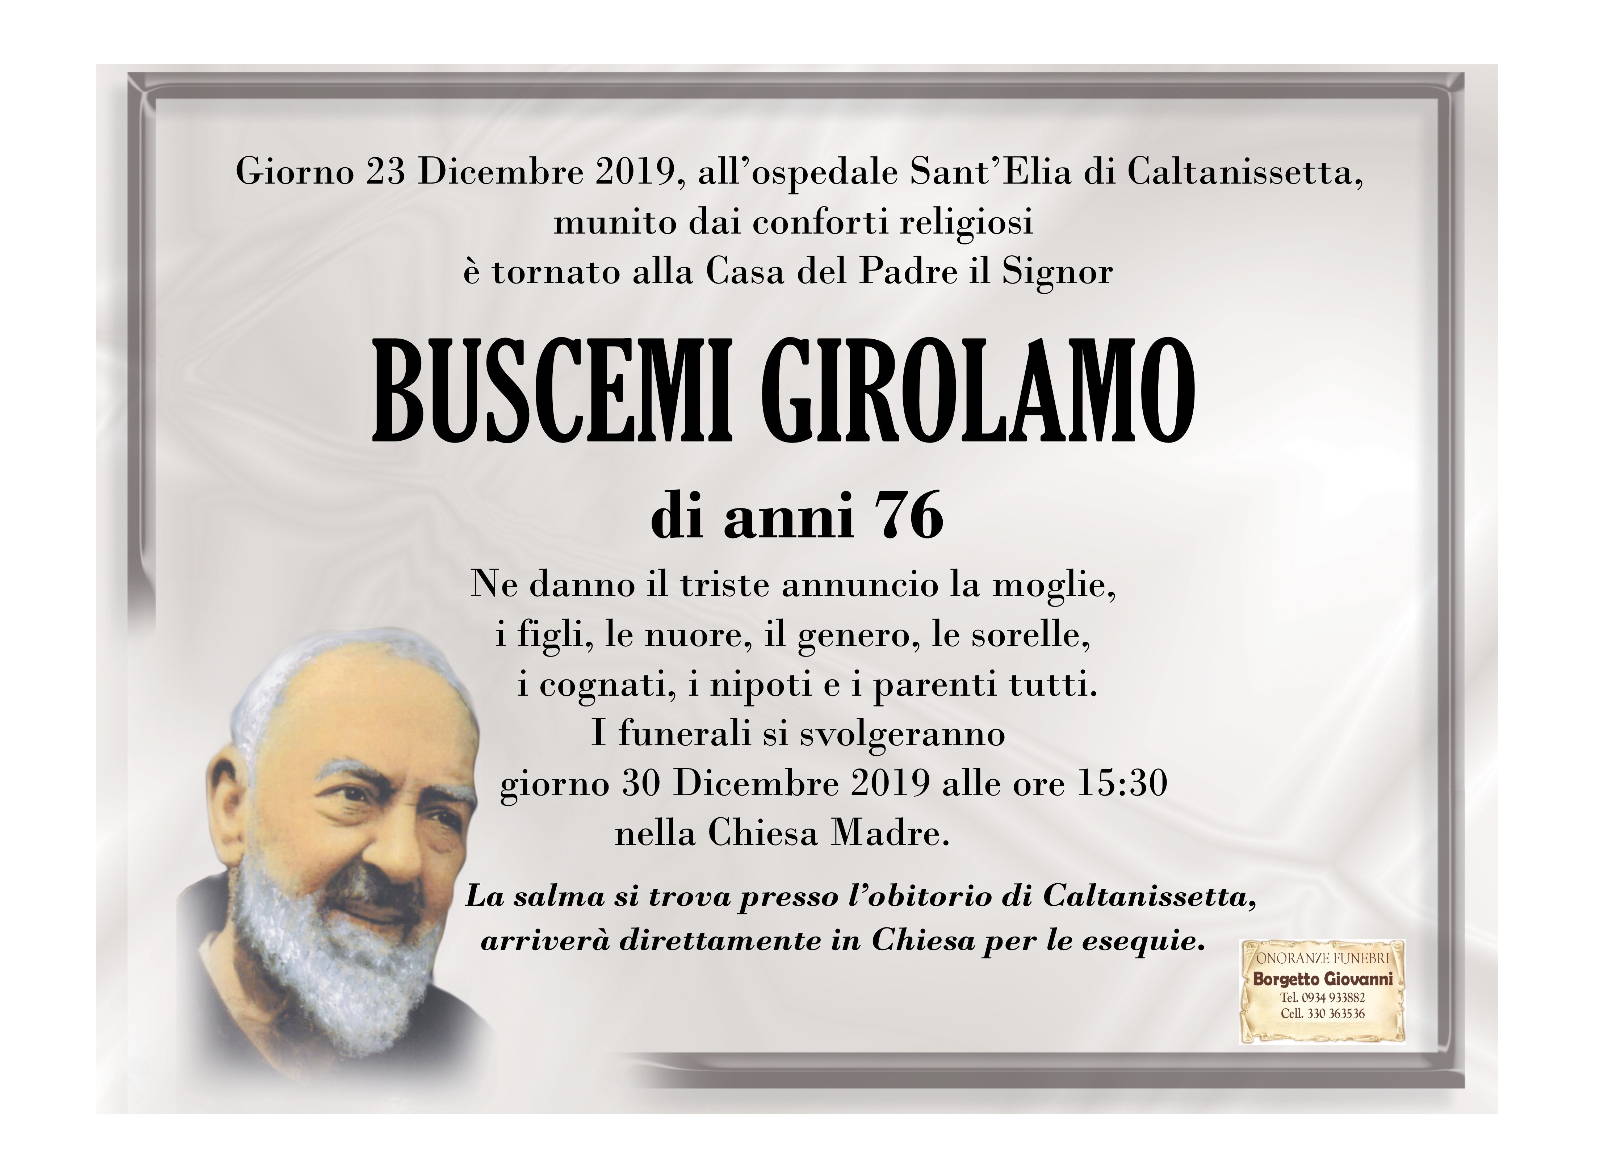 Girolamo Buscemi